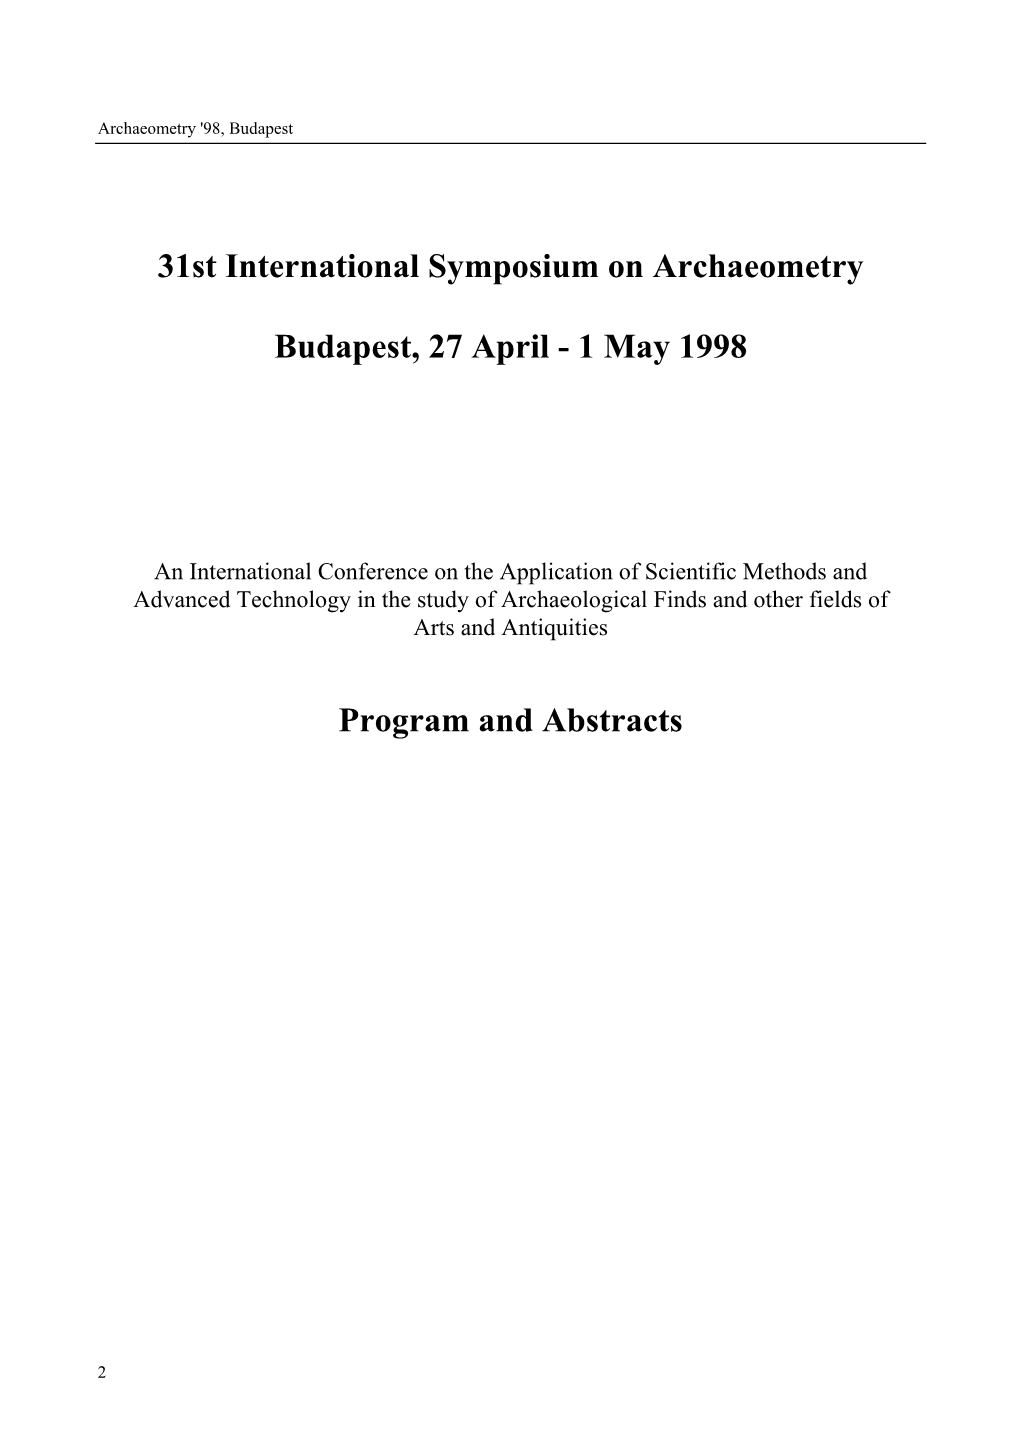 31St International Symposium on Archaeometry Budapest, 27 April